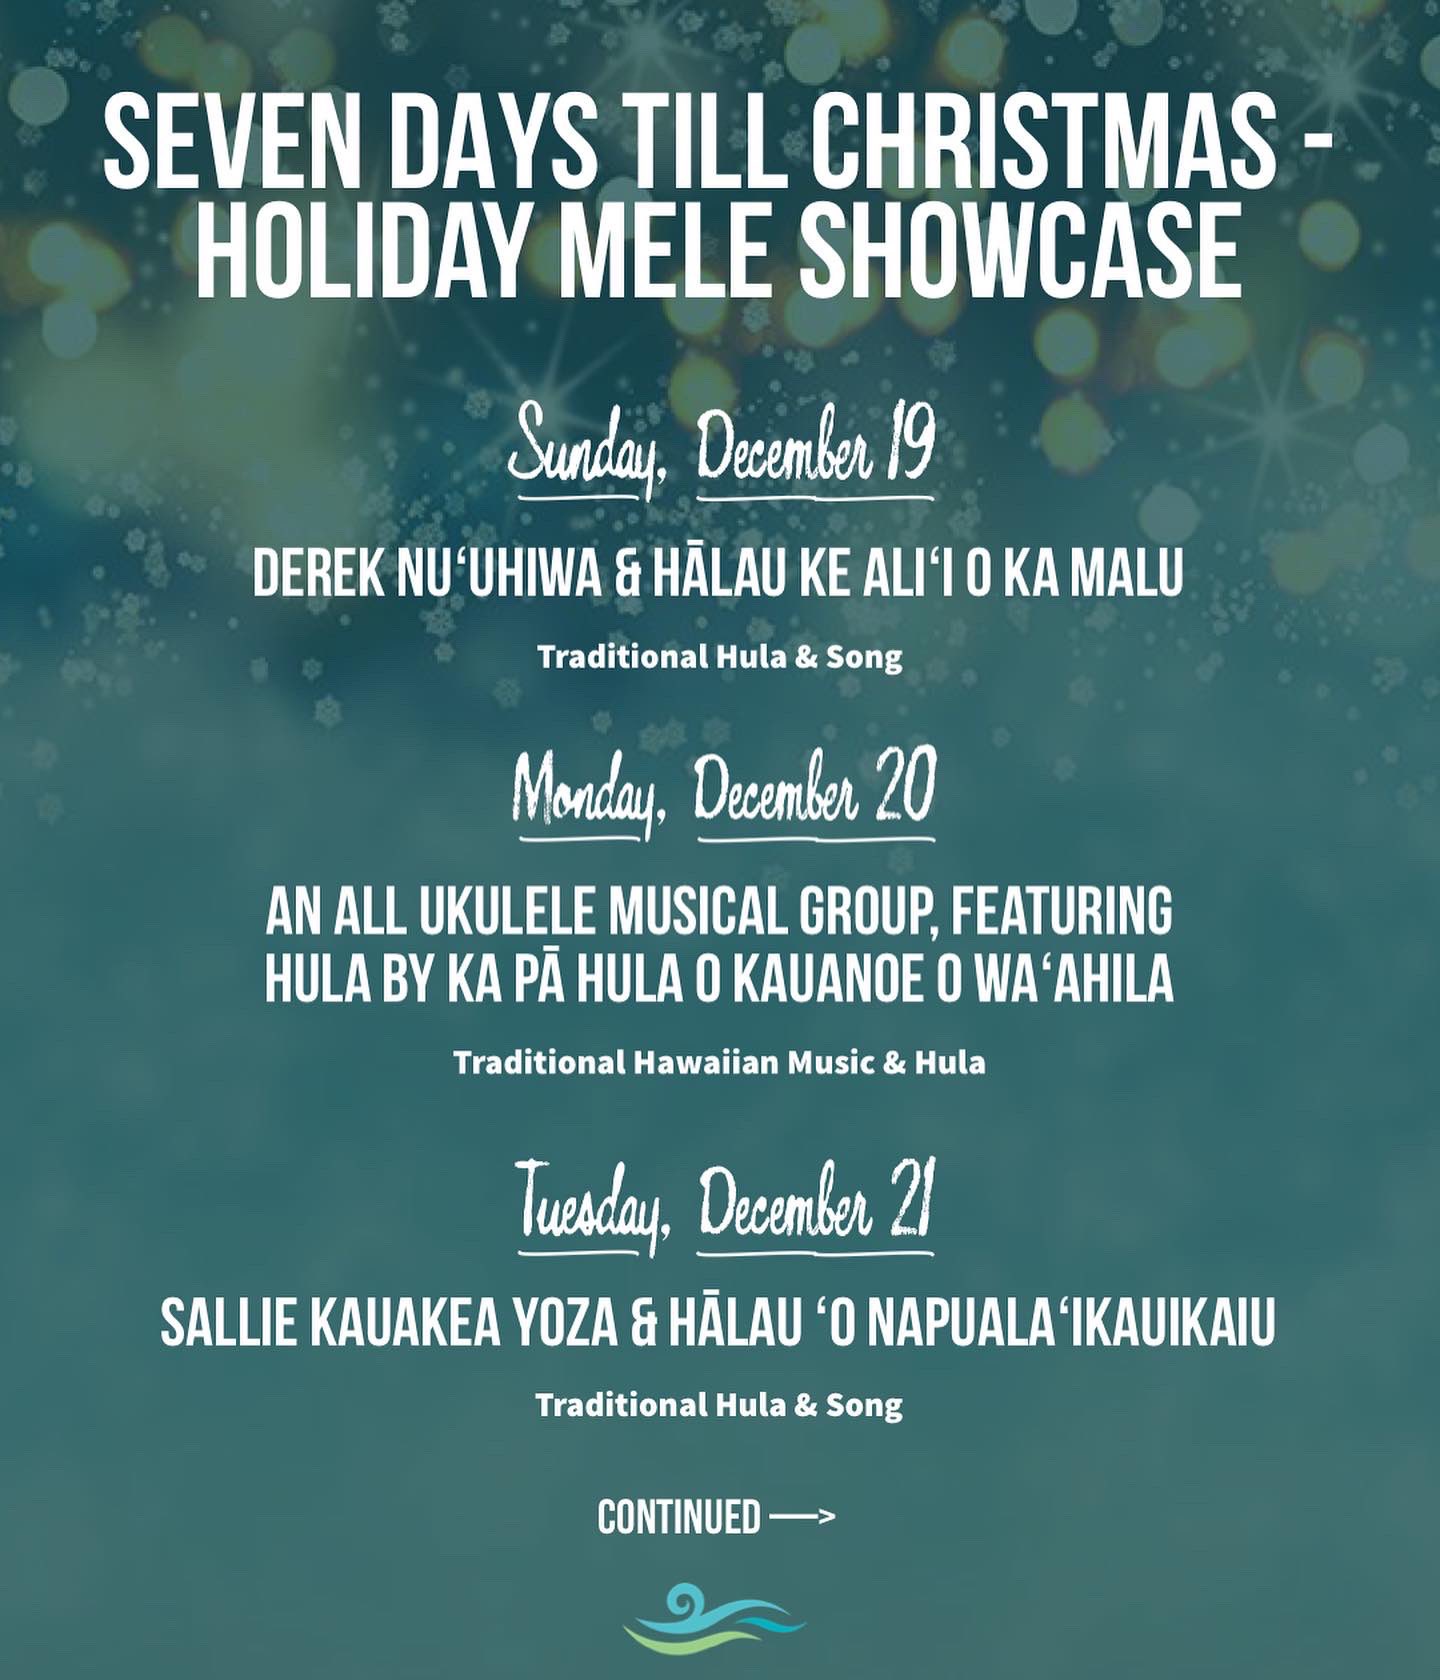 SEVEN DAYS TILL CHRISTMAS - Holiday Mele Showcase 